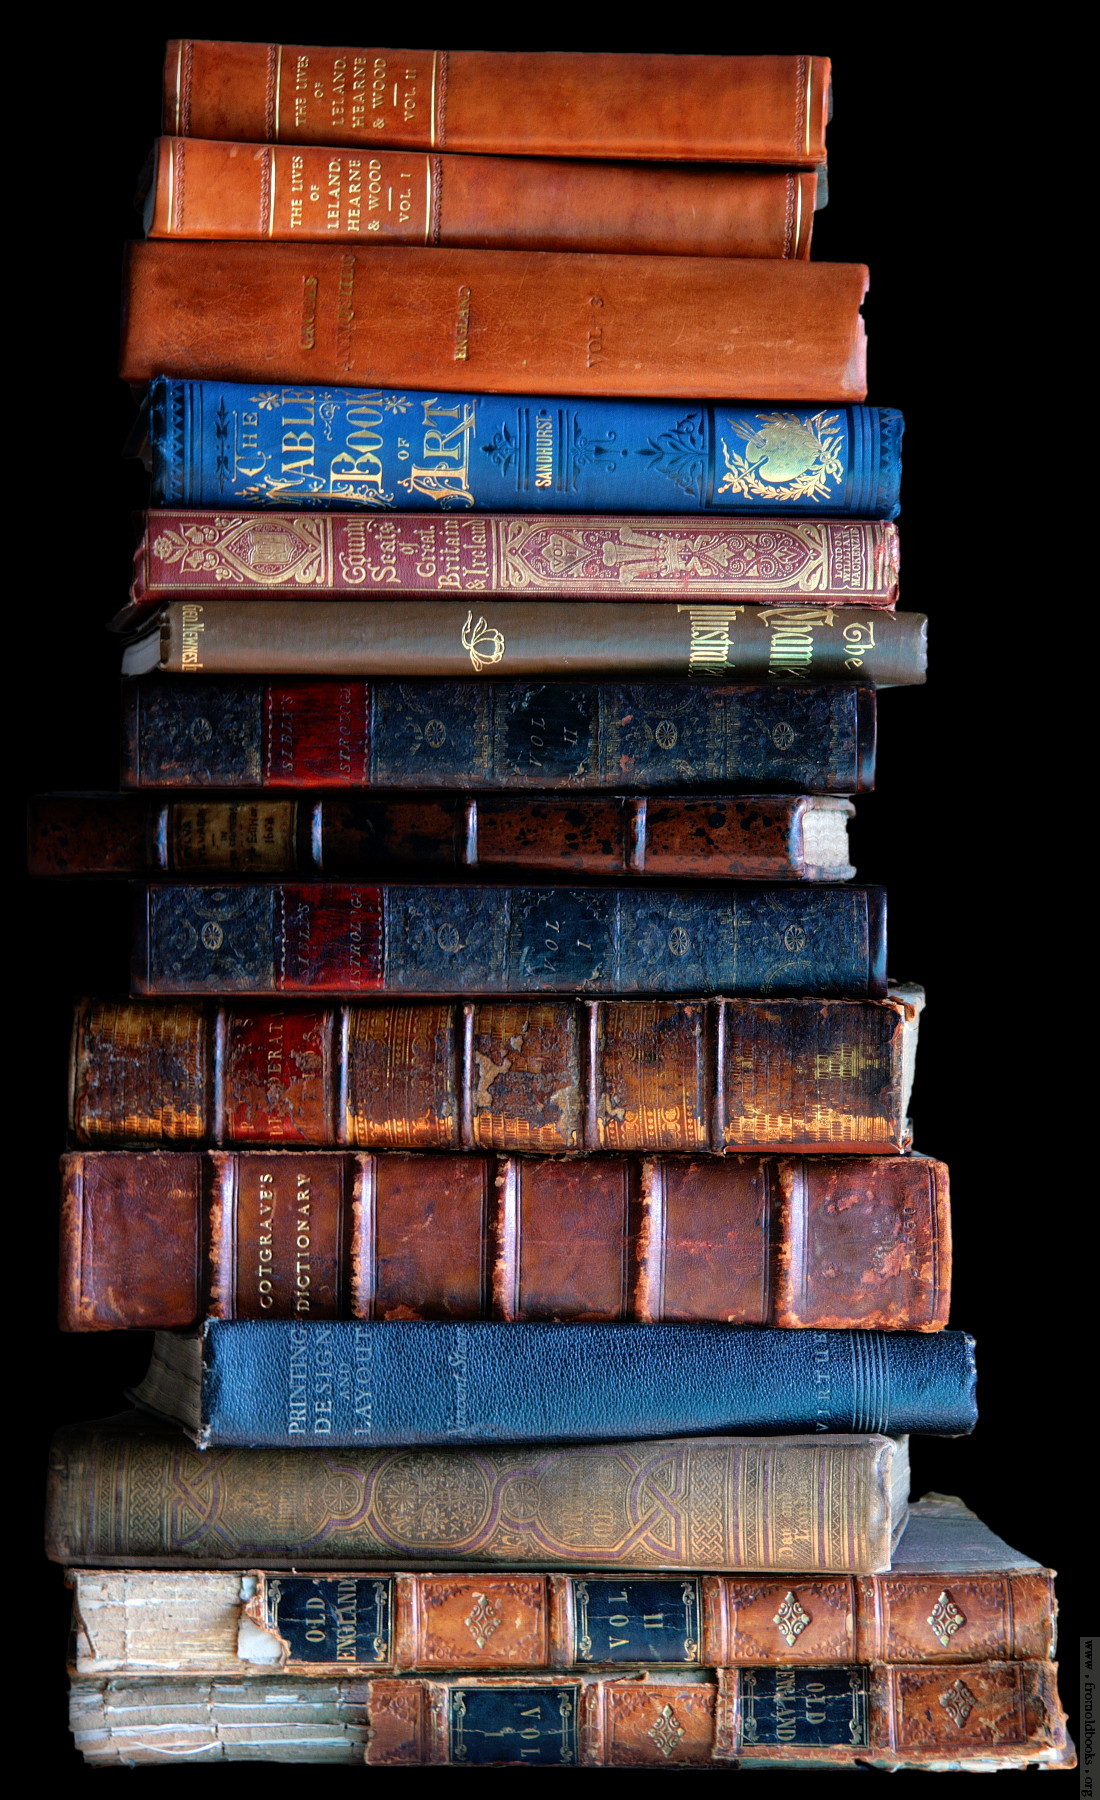 Stack of old books, dark background